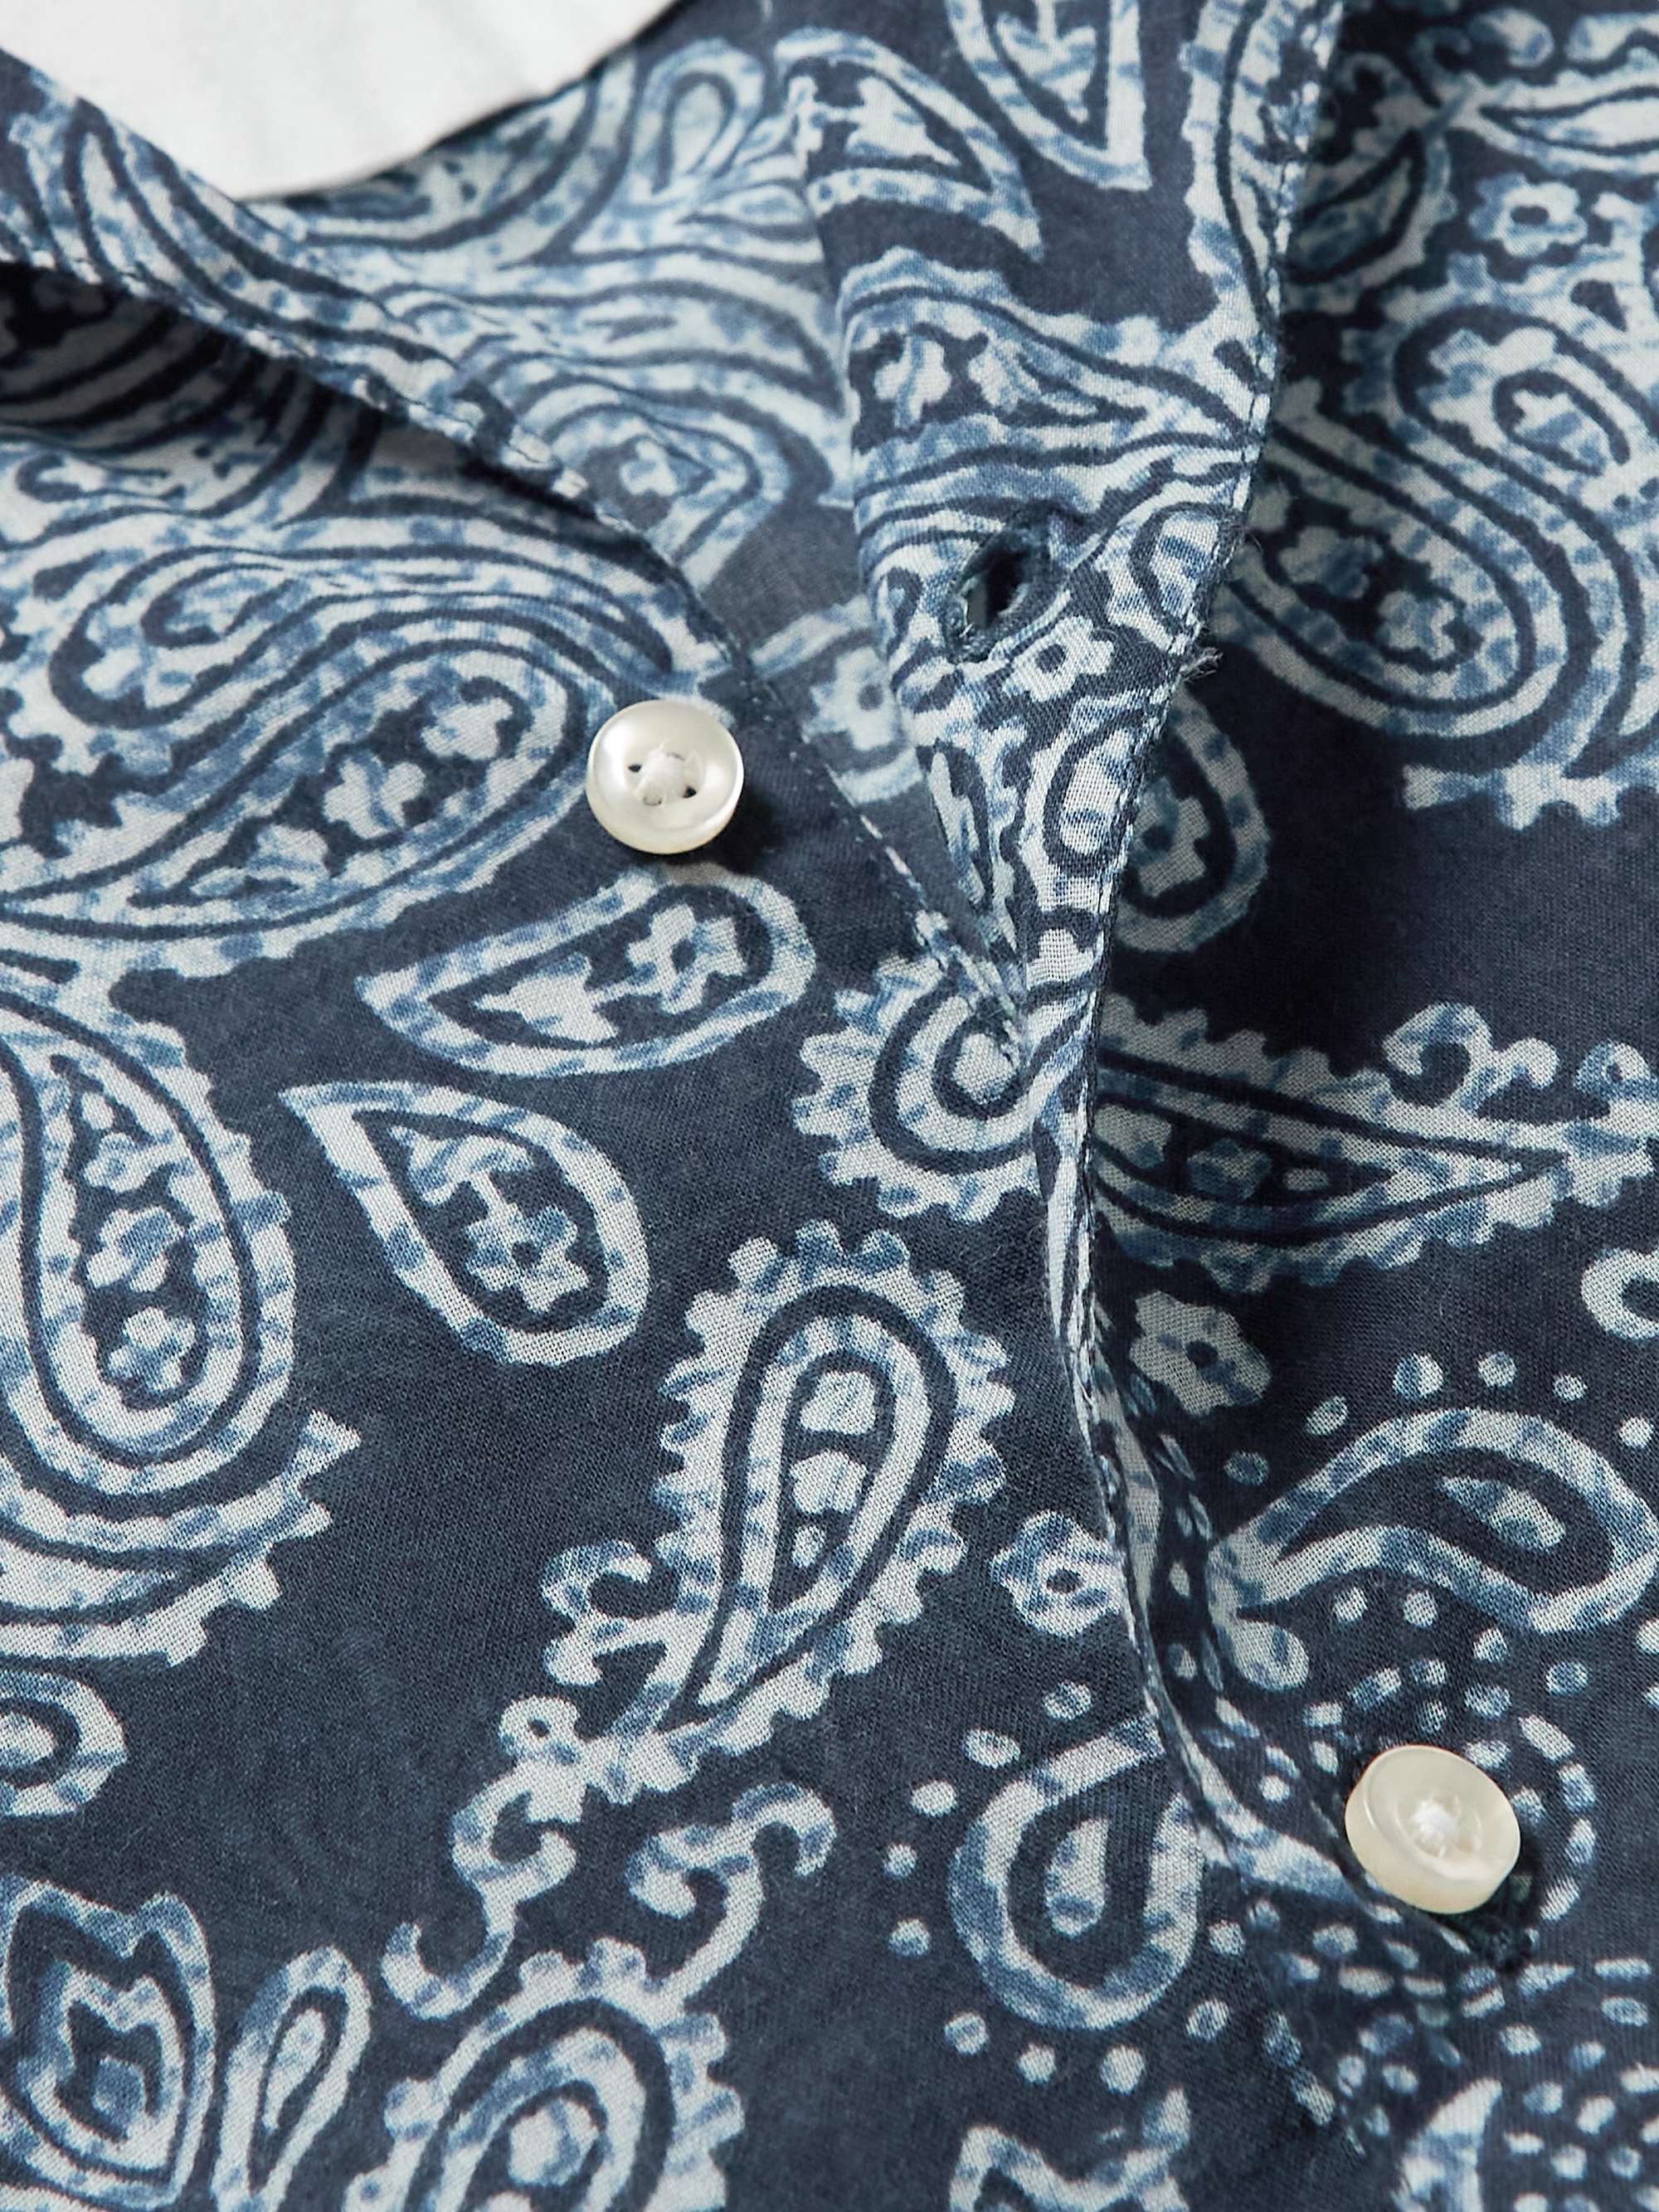 OFFICINE GÉNÉRALE Eren Camp-Collar Printed Cotton-Voile Shirt